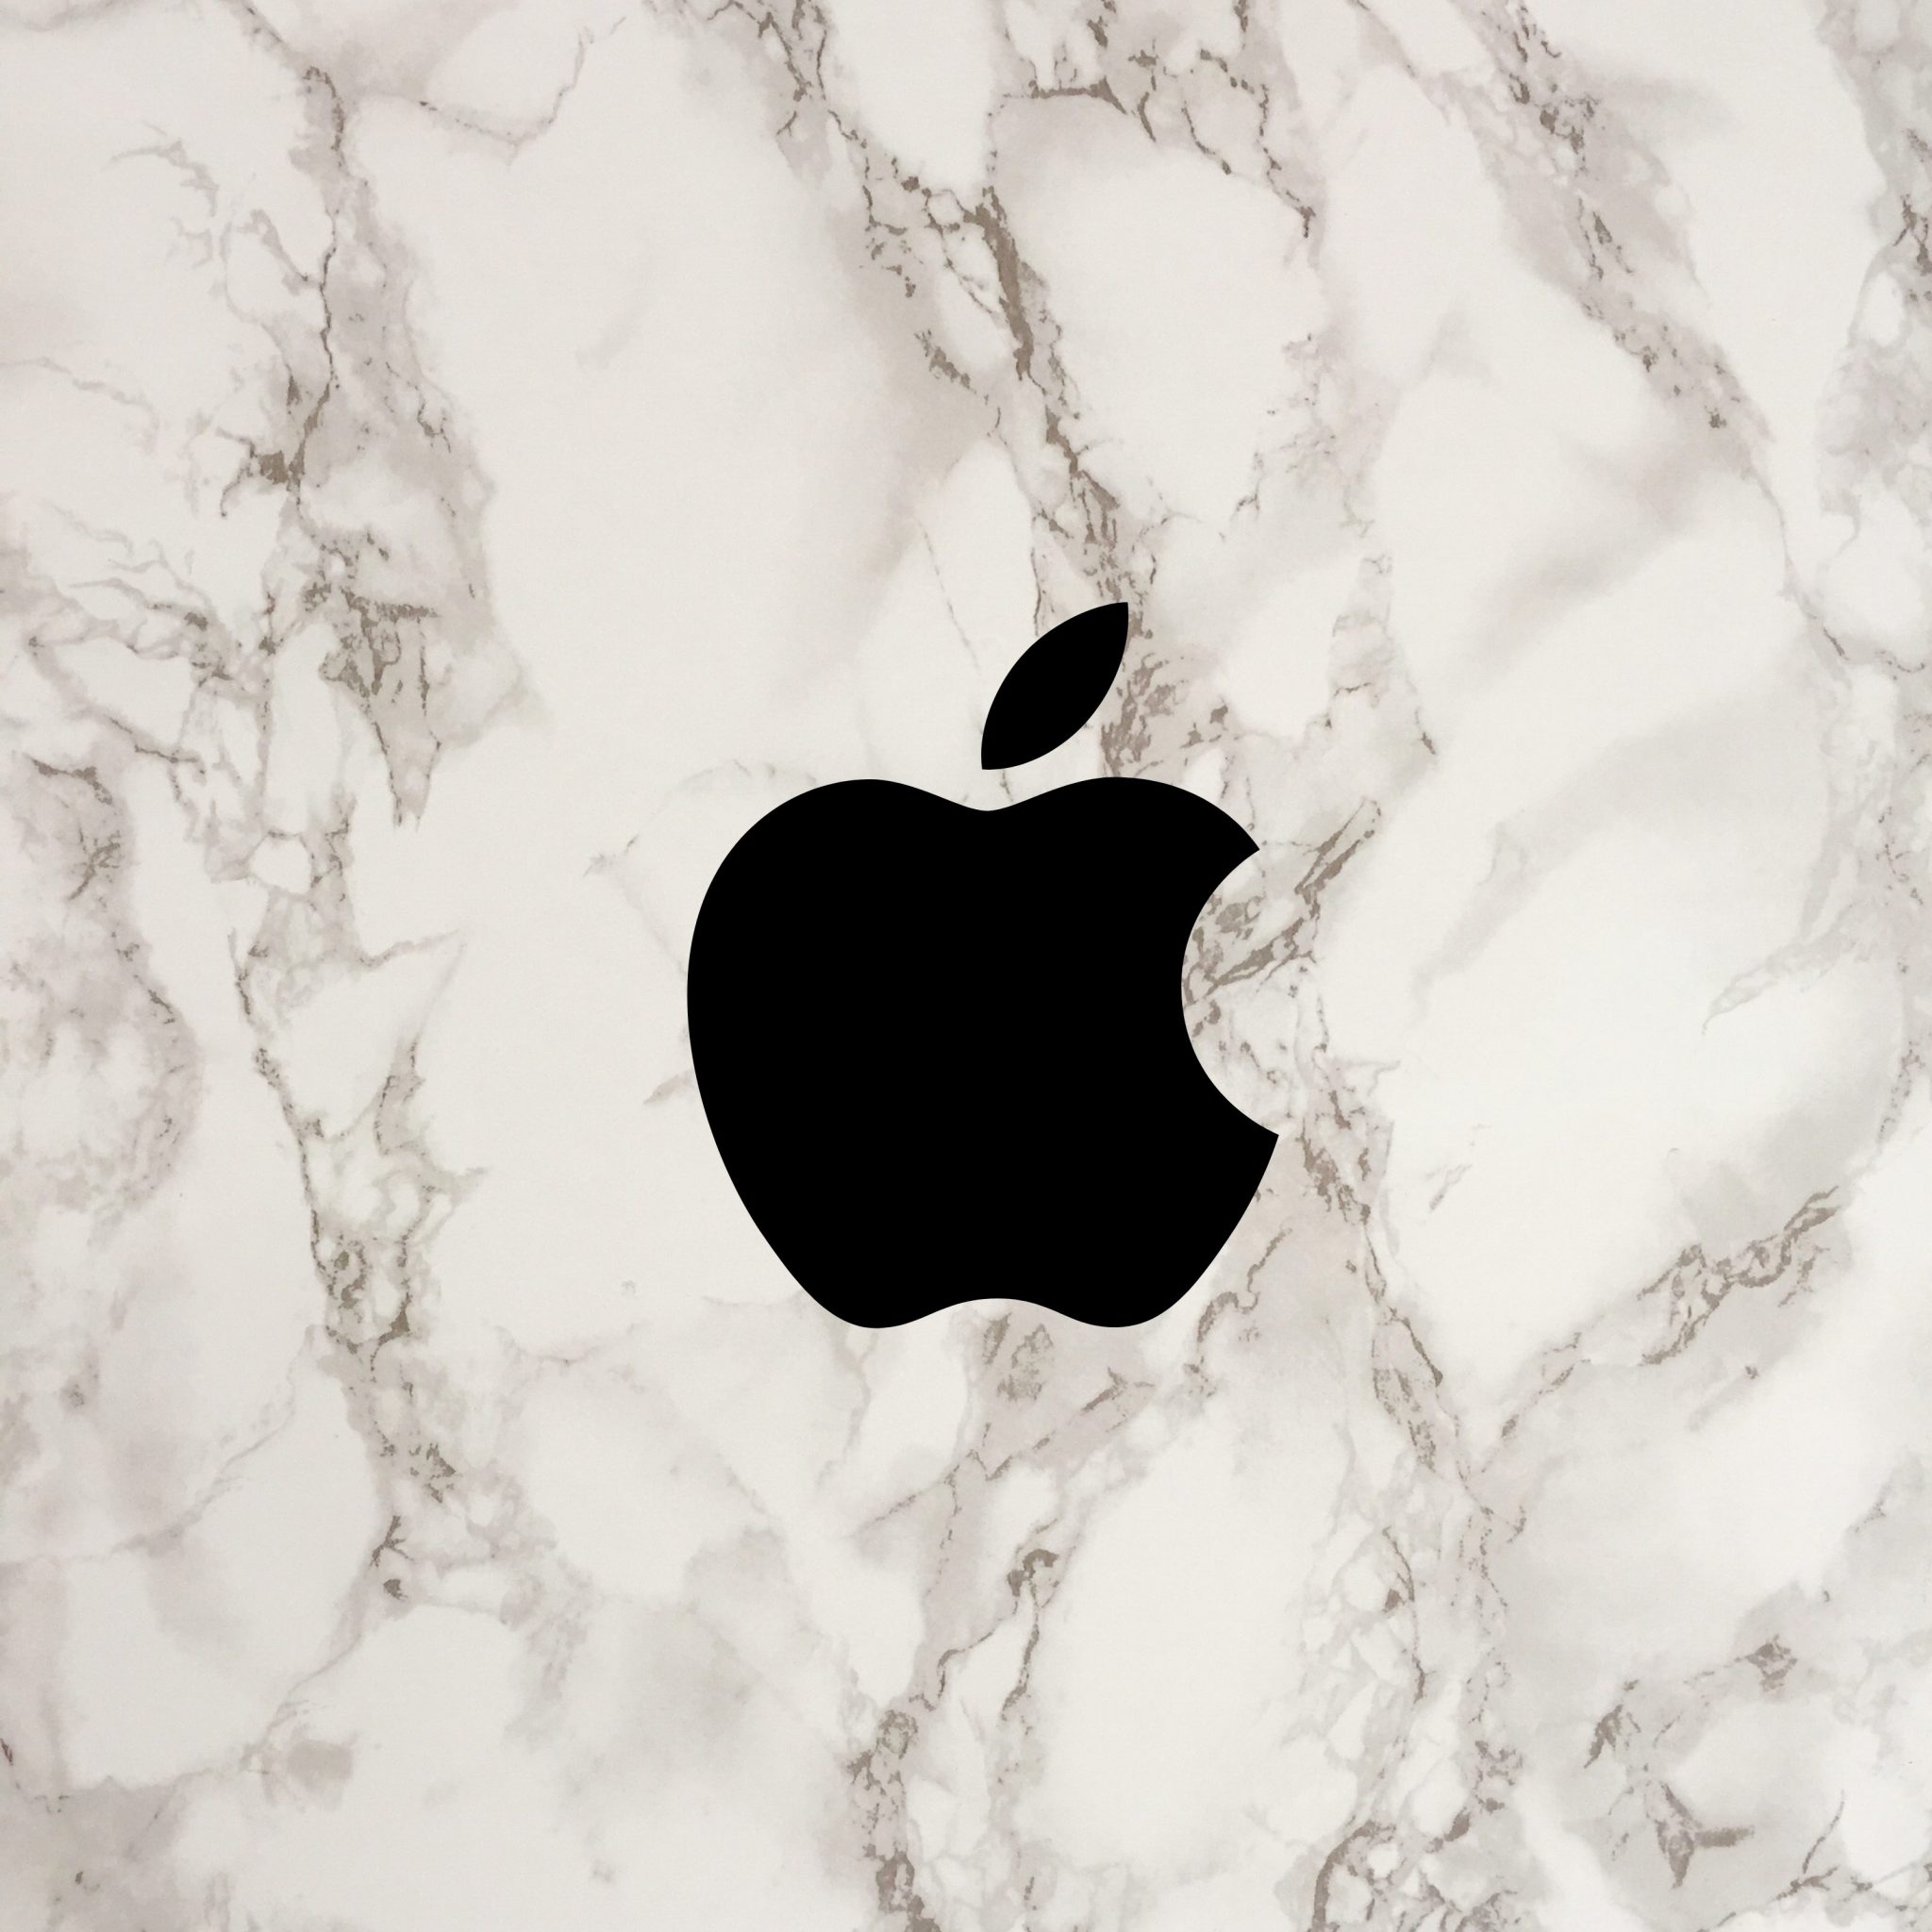 2048x2048 wallpapers iPad retina Apple Logo White Marble Ceramic Granite iPad Wallpaper 2048x2048 pixels resolution